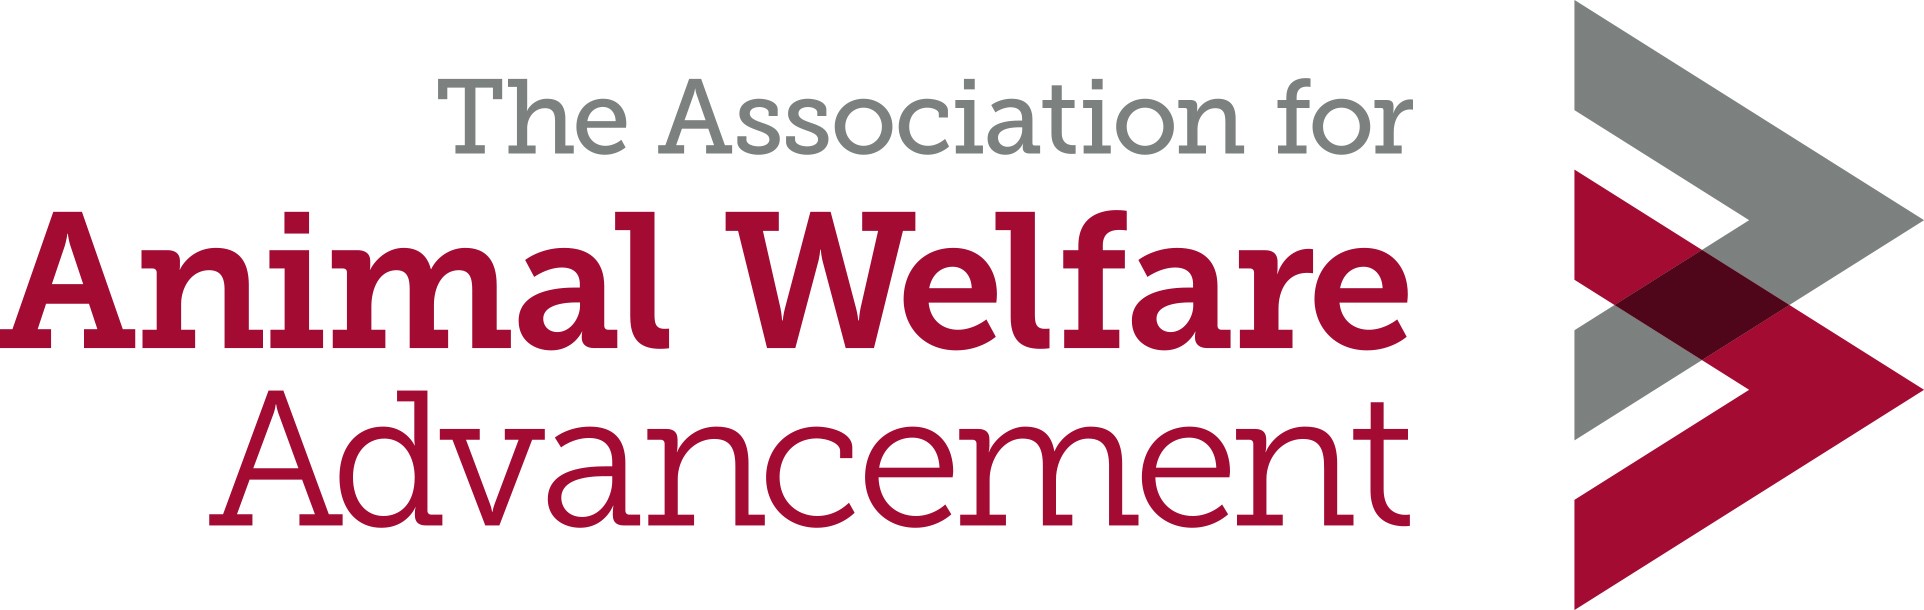 the association for animal welfare advancement